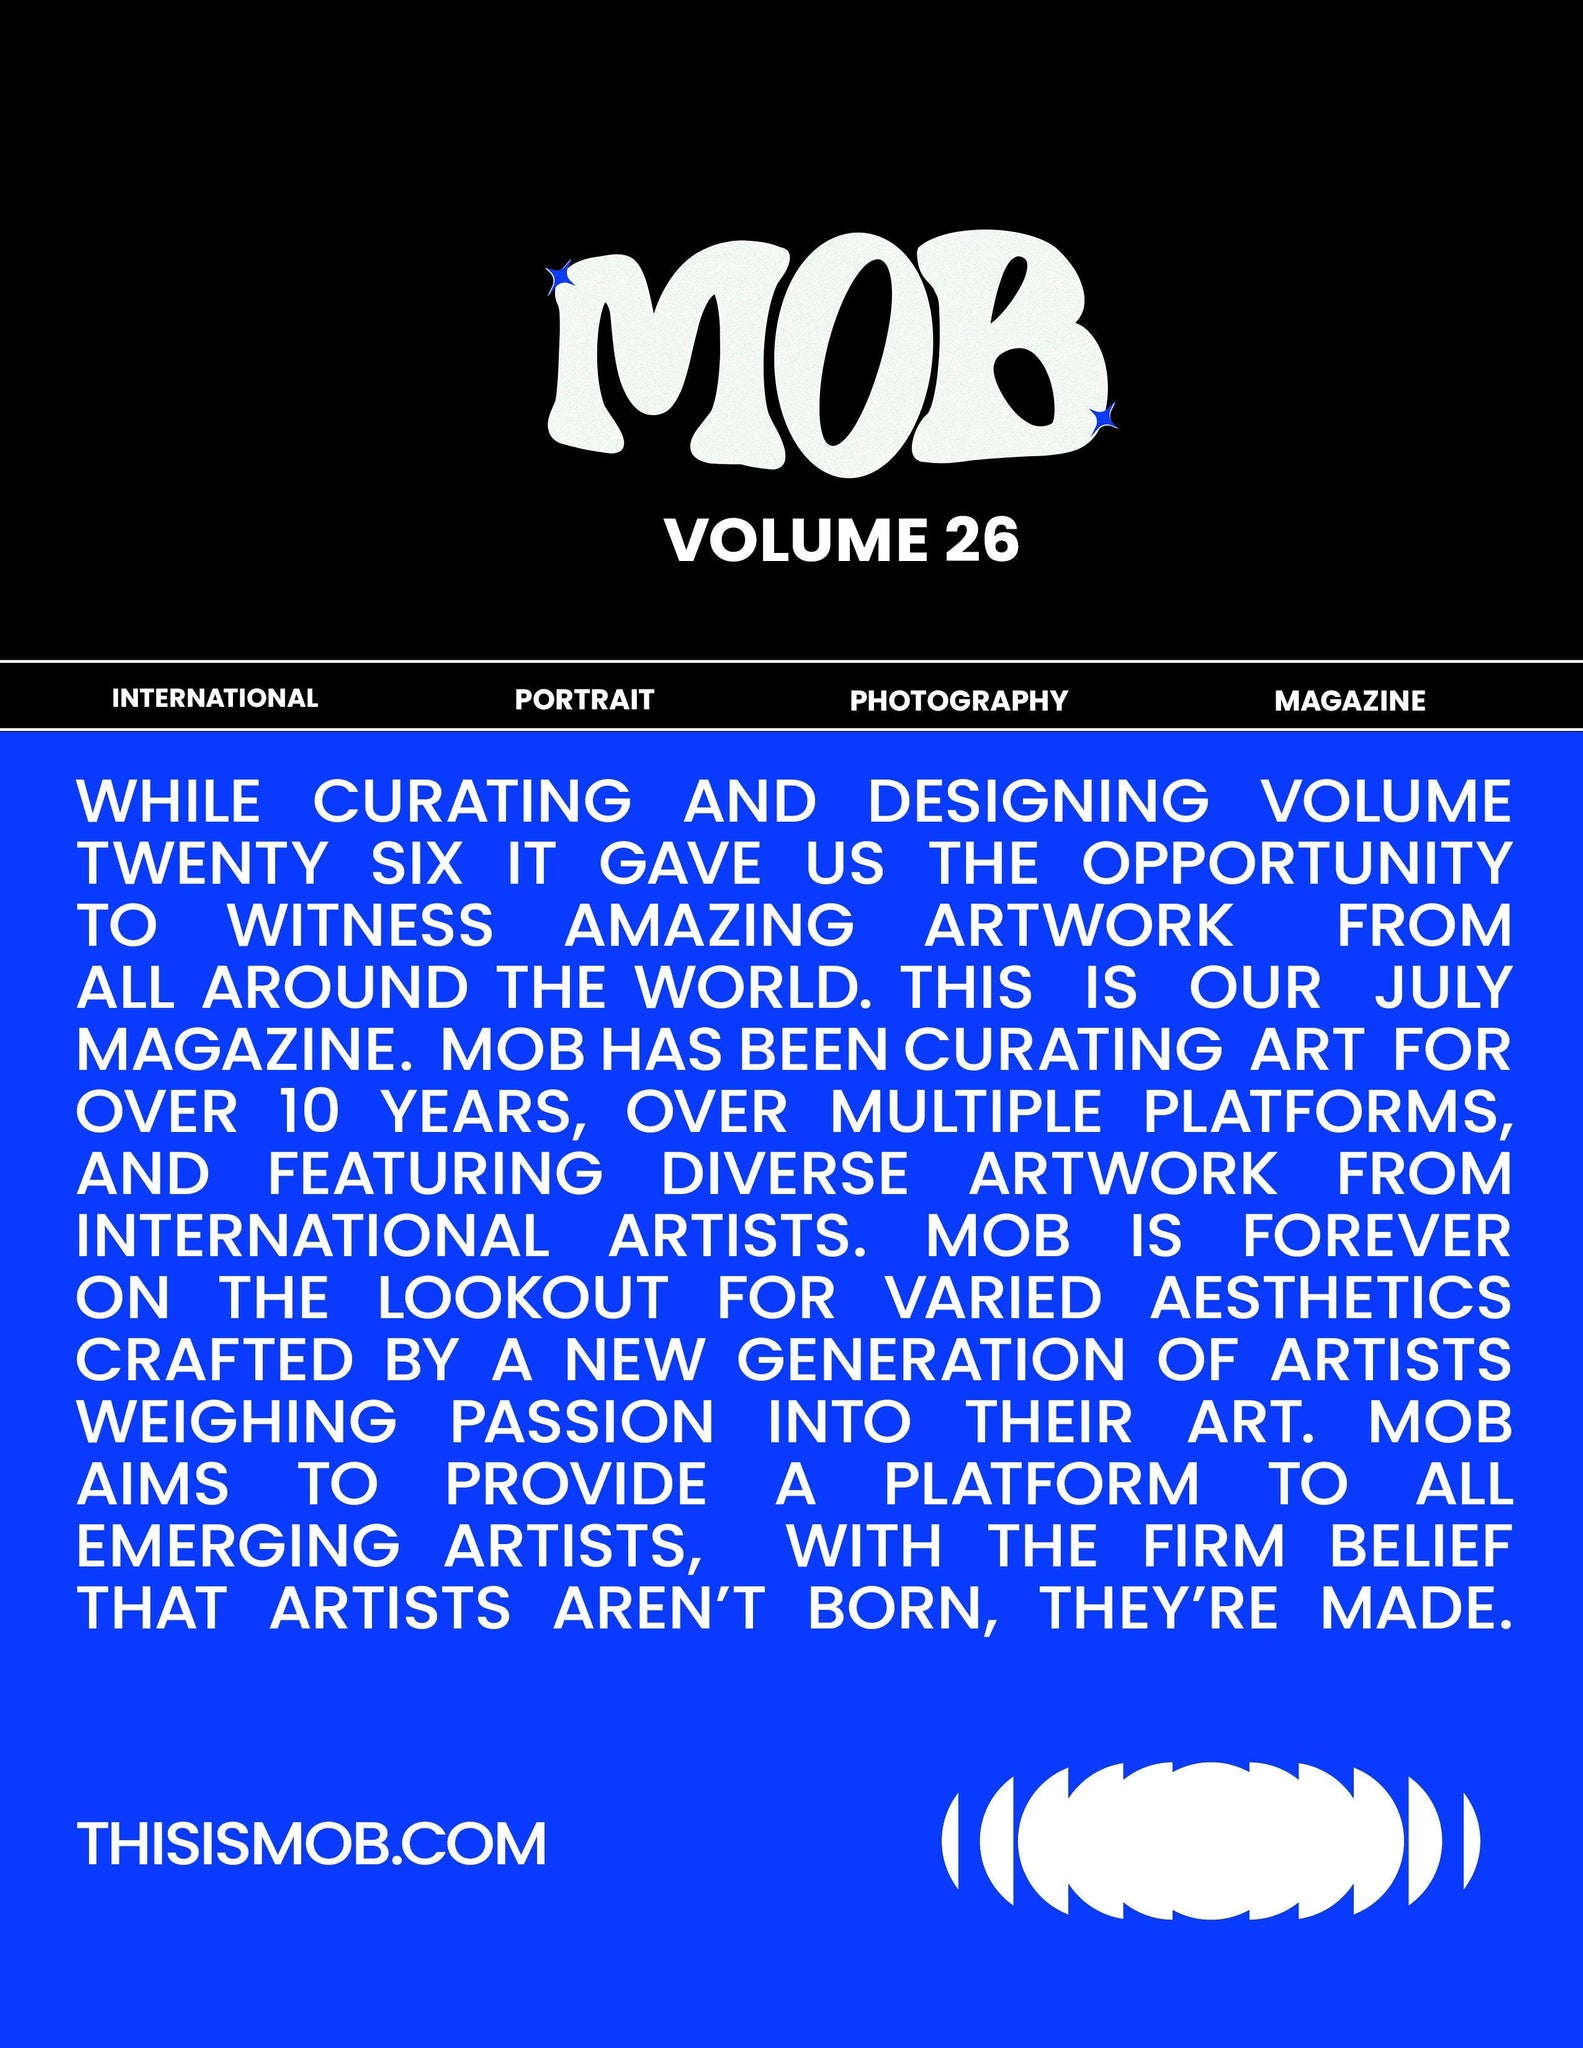 MOB JOURNAL | VOLUME TWENTY SIX | ISSUE #03 - Mob Journal